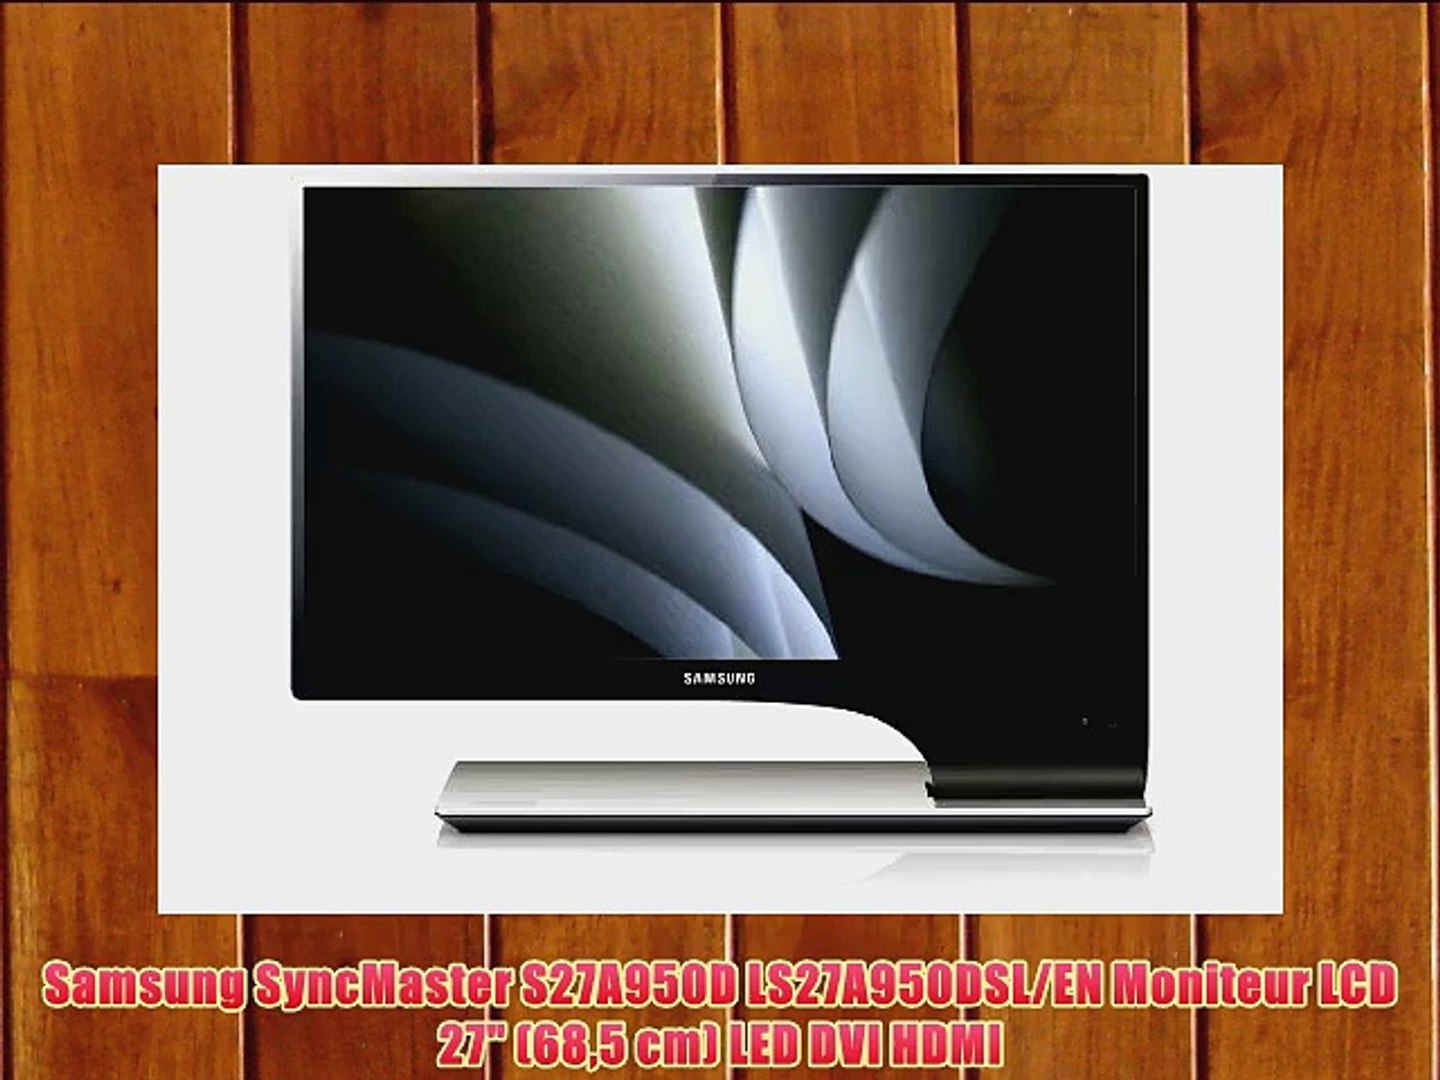 ⁣Samsung SyncMaster S27A950D LS27A950DSL/EN Moniteur LCD 27 (685 cm) LED DVI HDMI